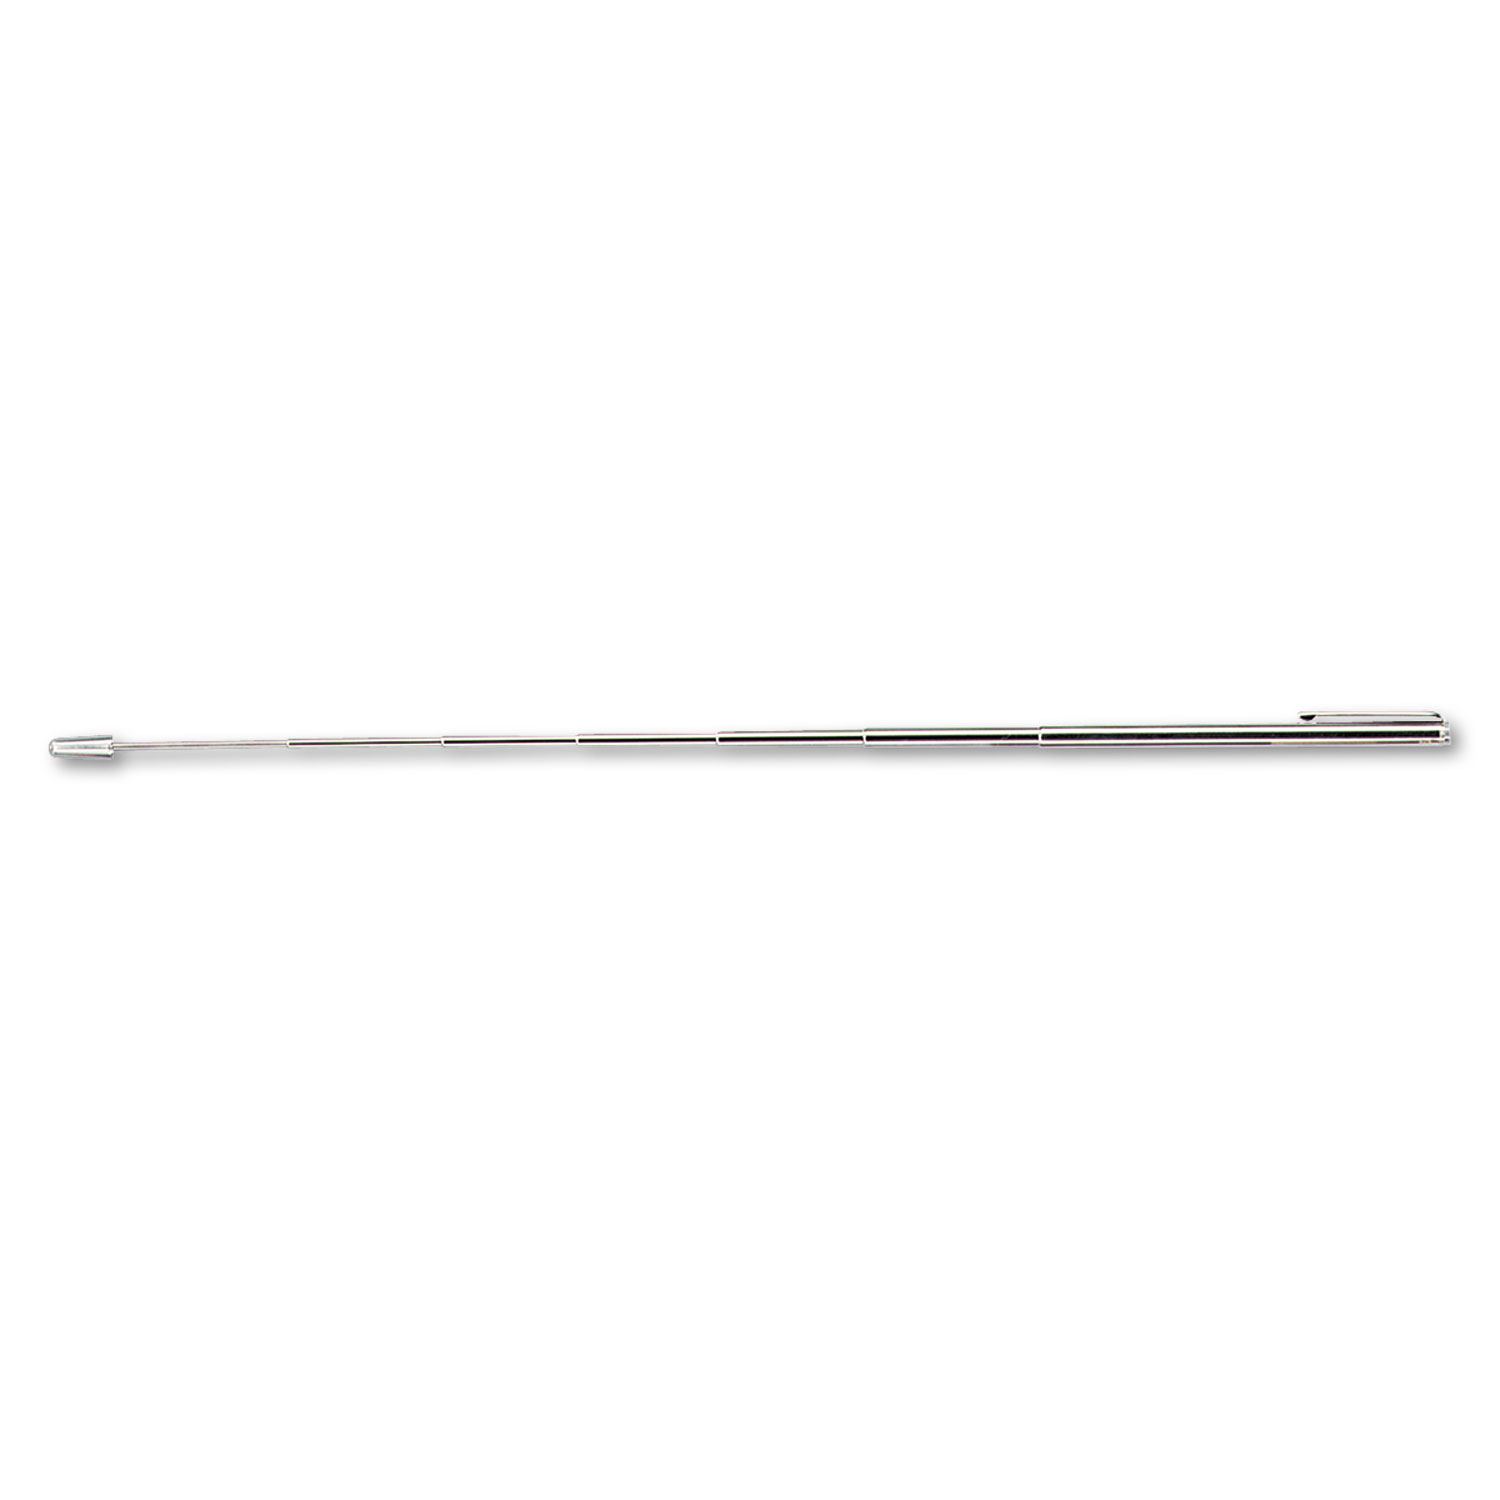  Apollo V18001 Slimline Pen-Size Pocket Pointer w/Clip, Extends to 24-1/2, Silver (APO18001) 